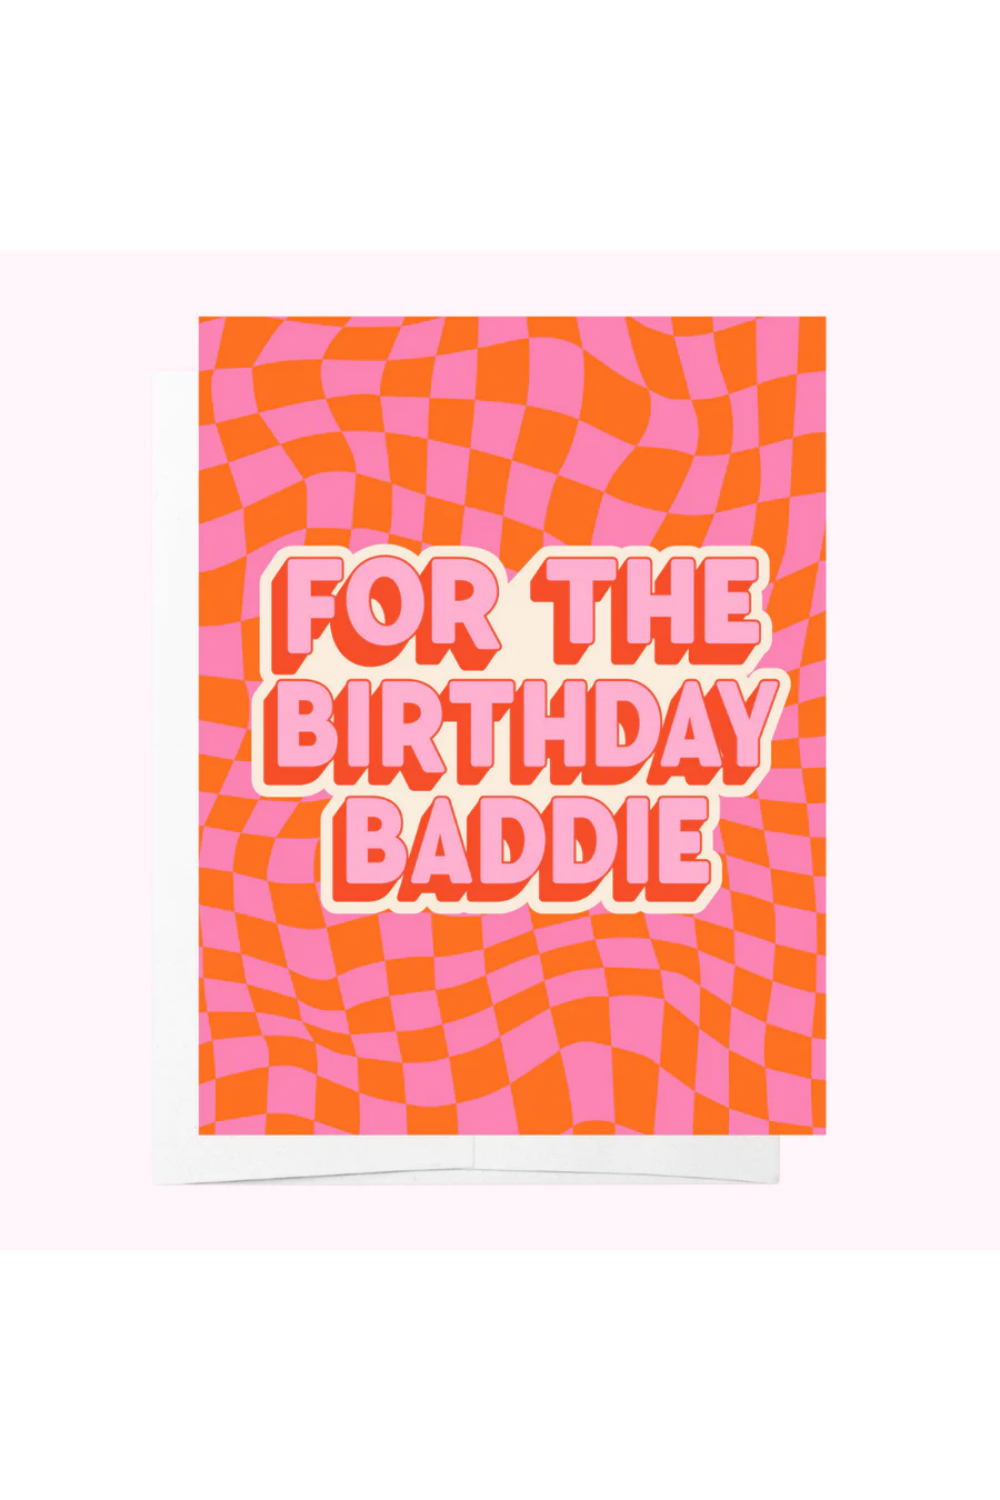 BIRTHDAY BADDIE GREETING CARD